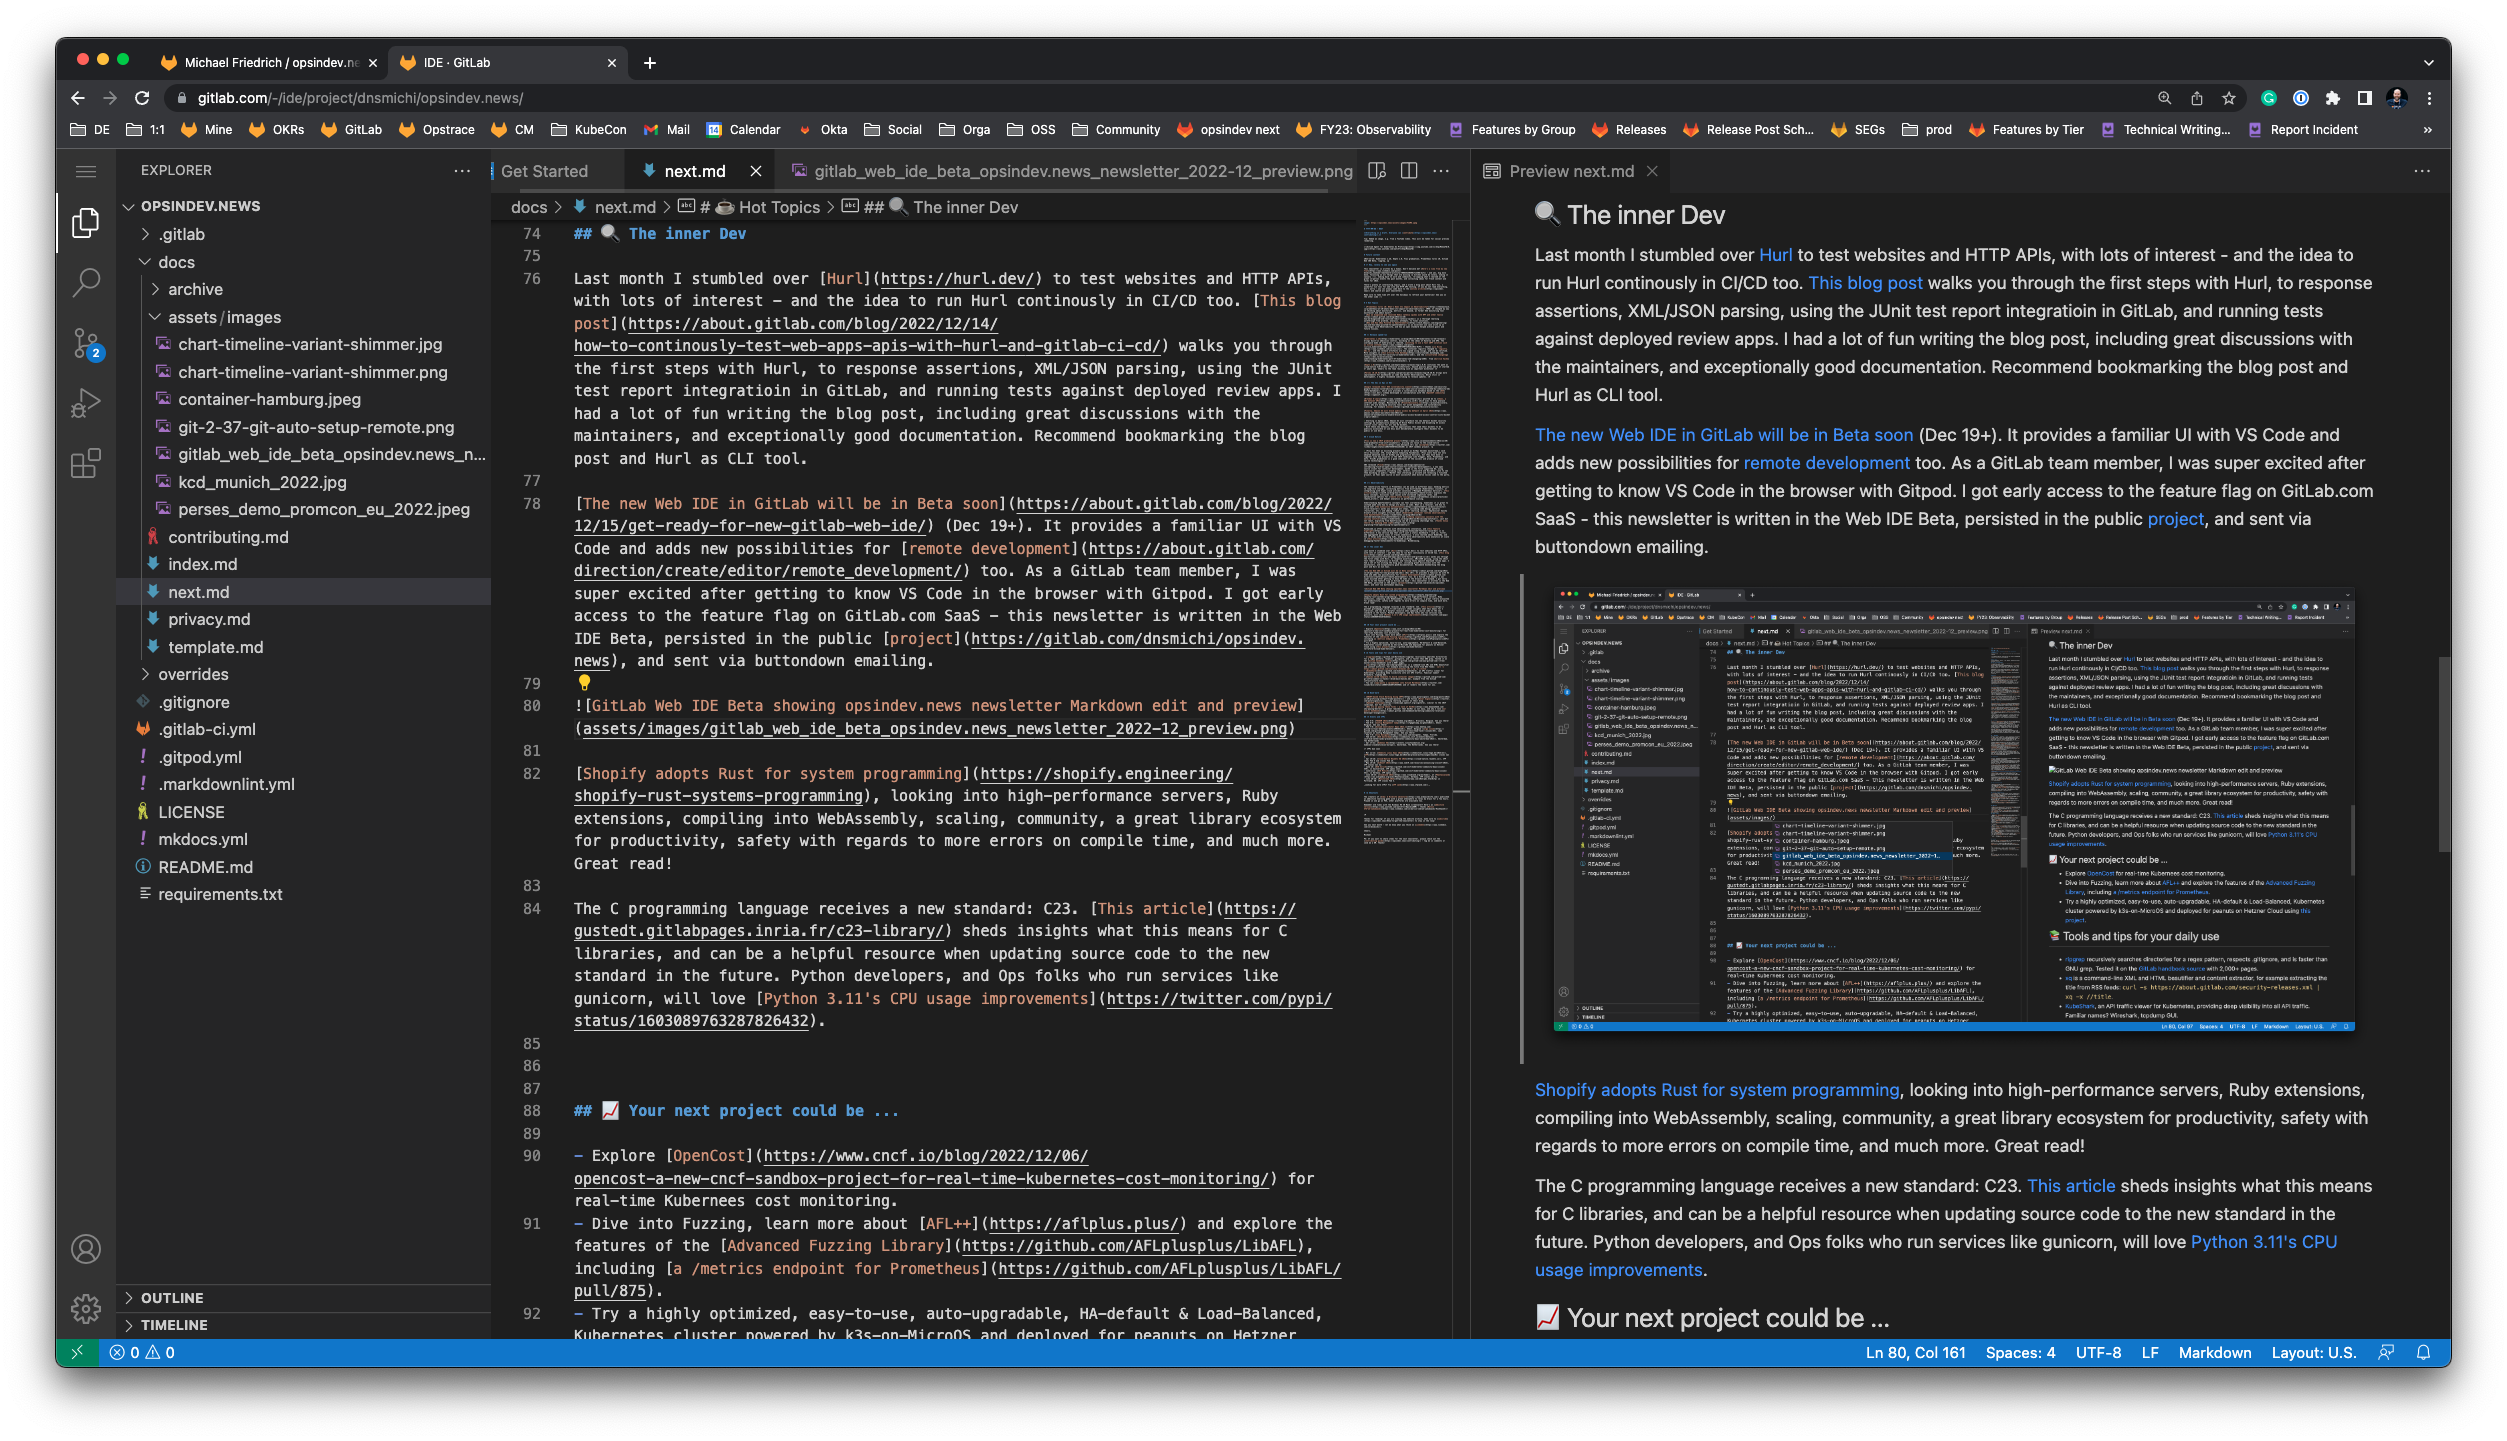 GitLab Web IDE Beta showing opsindev.news newsletter Markdown edit and preview